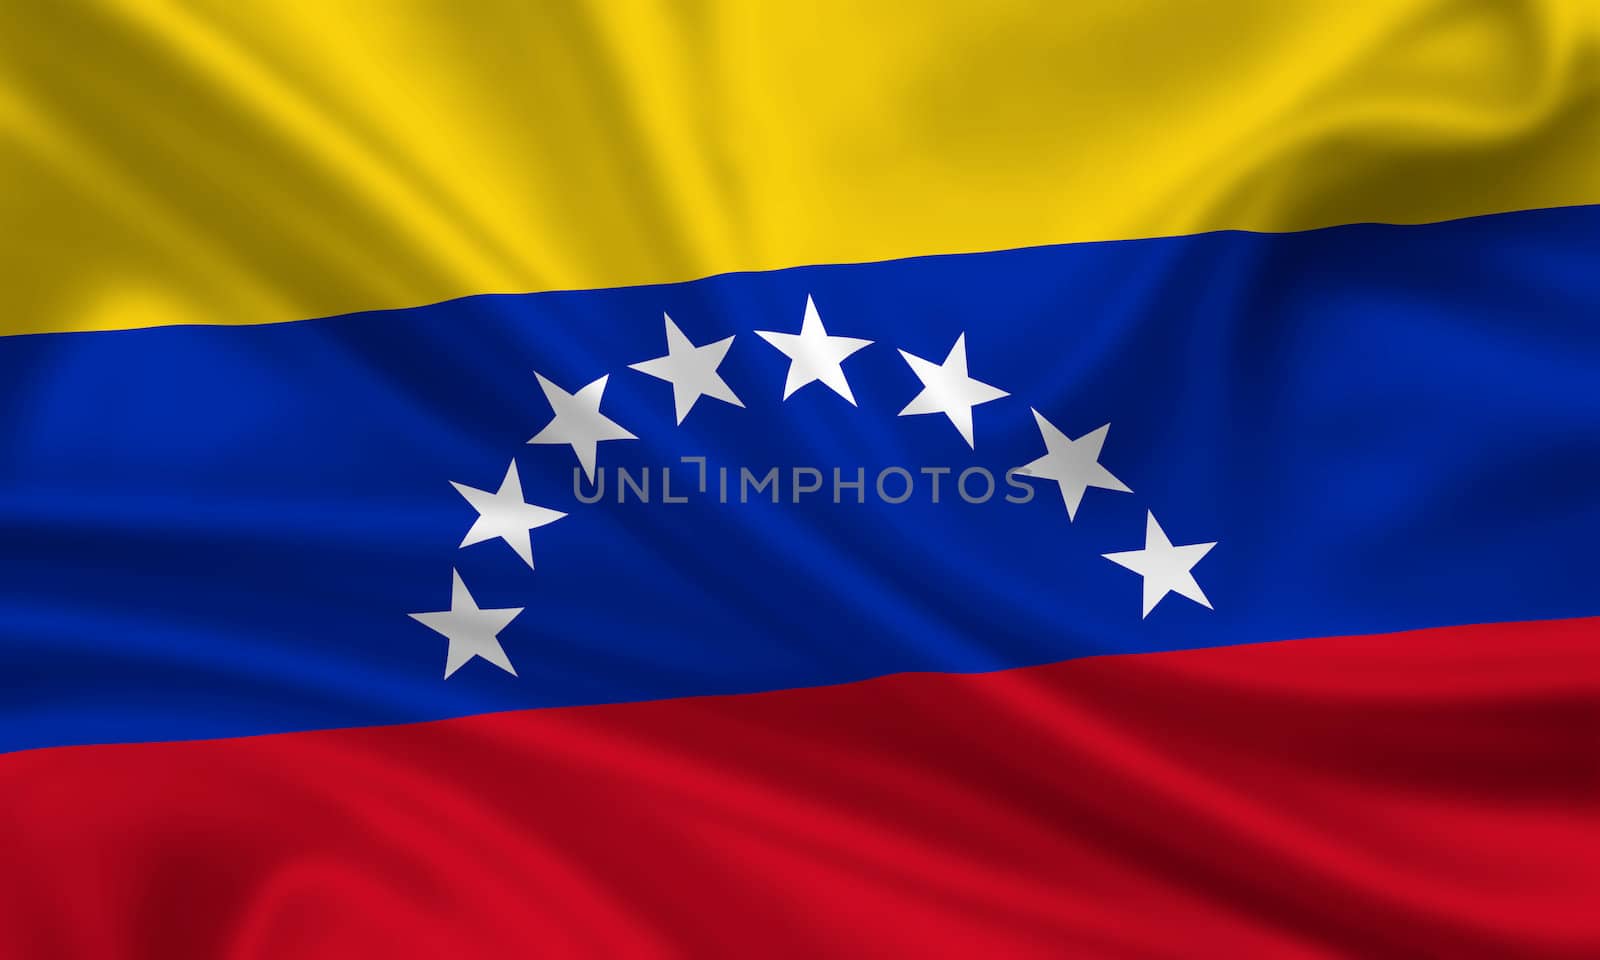 waving flag of venezuela